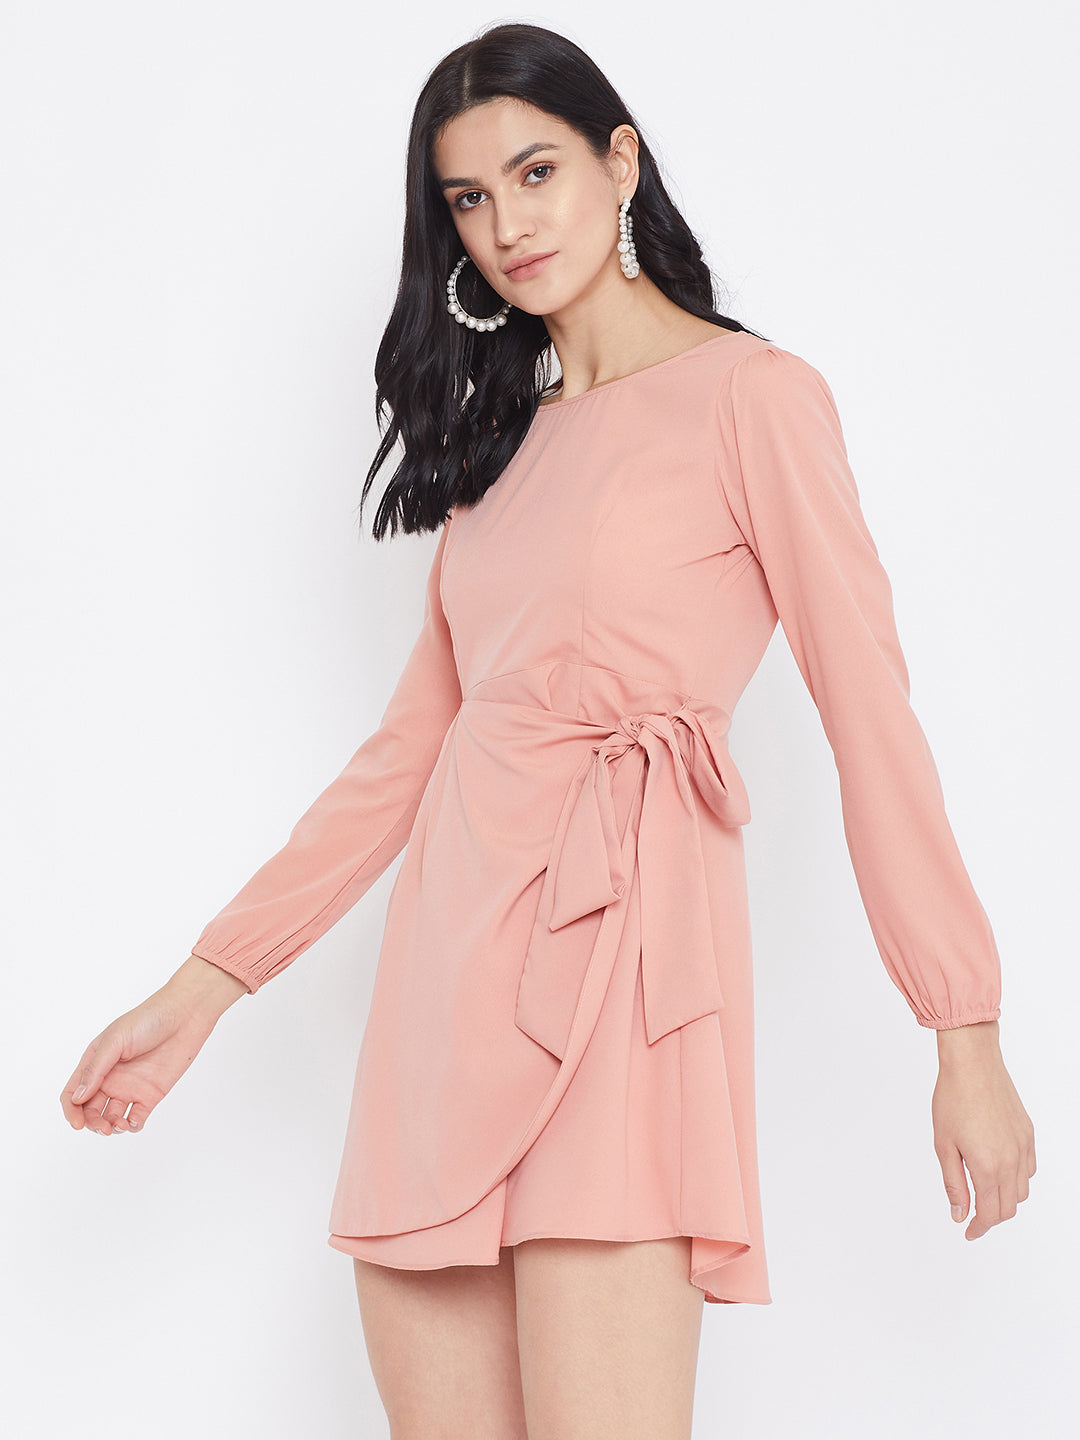 Prana Dress Women's Medium Pink Manori Twist Back Knotted Stretchy